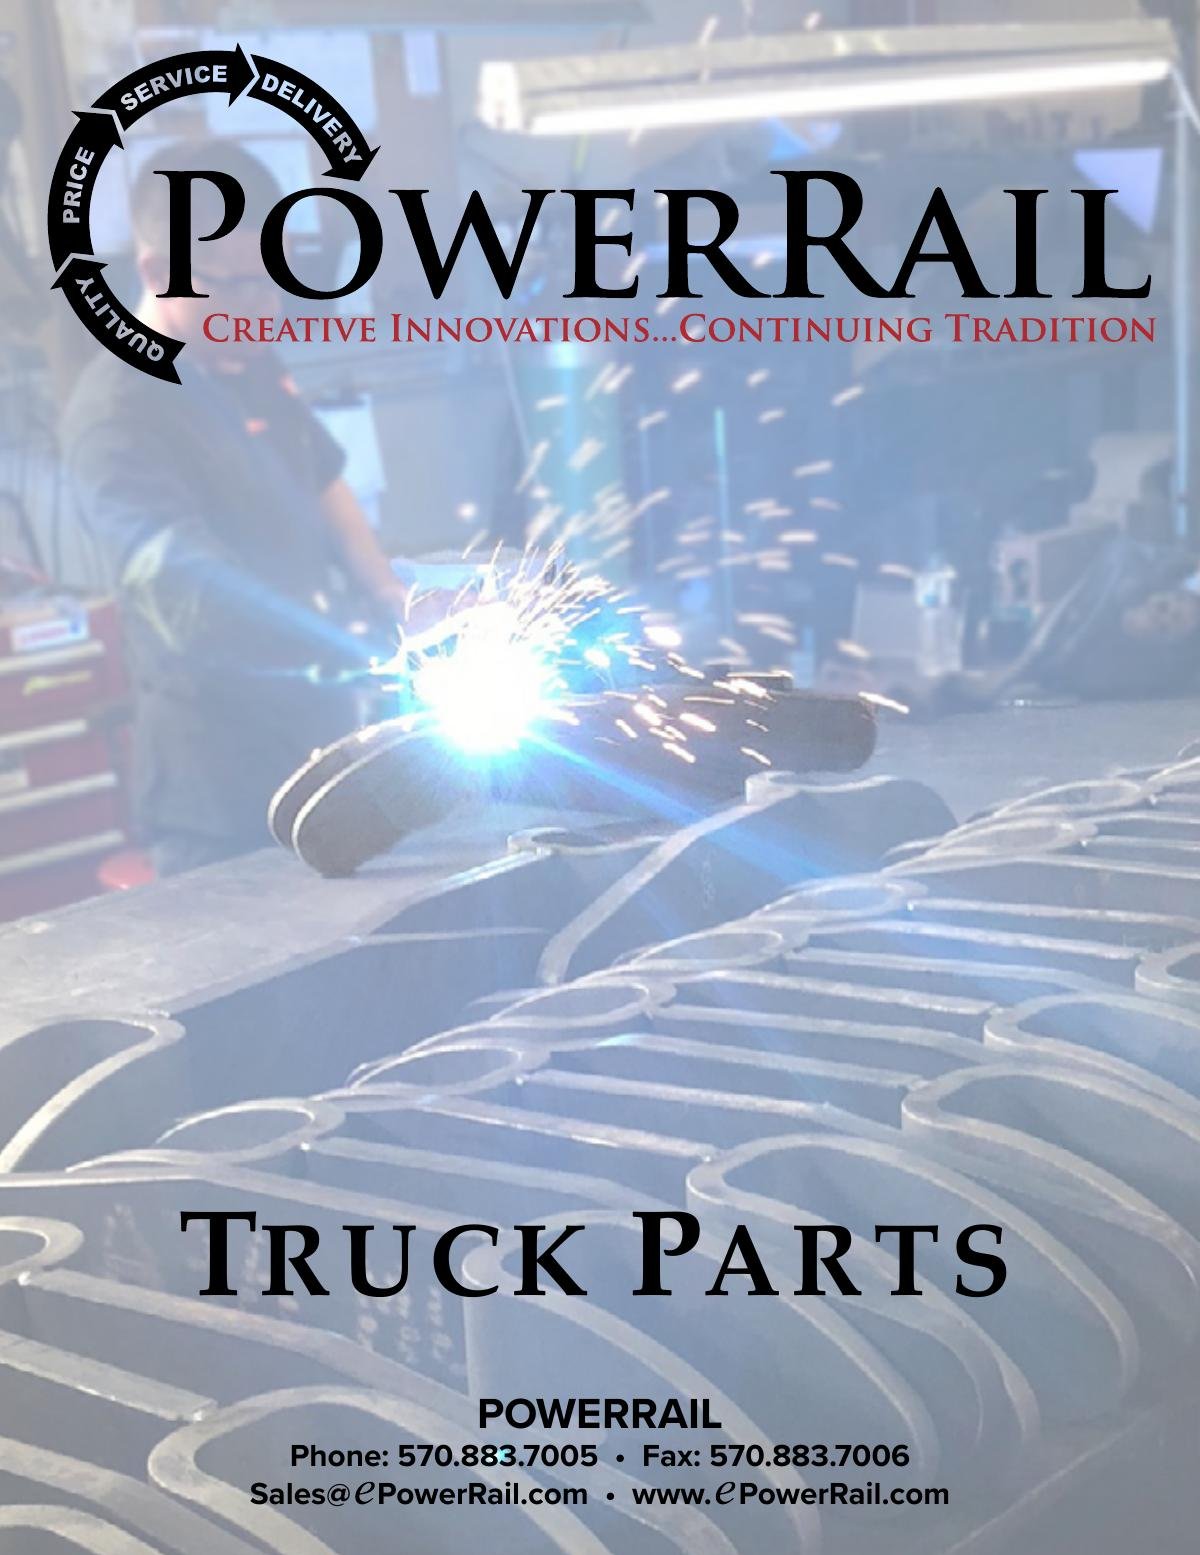 PowerRail Truck Parts Catalog